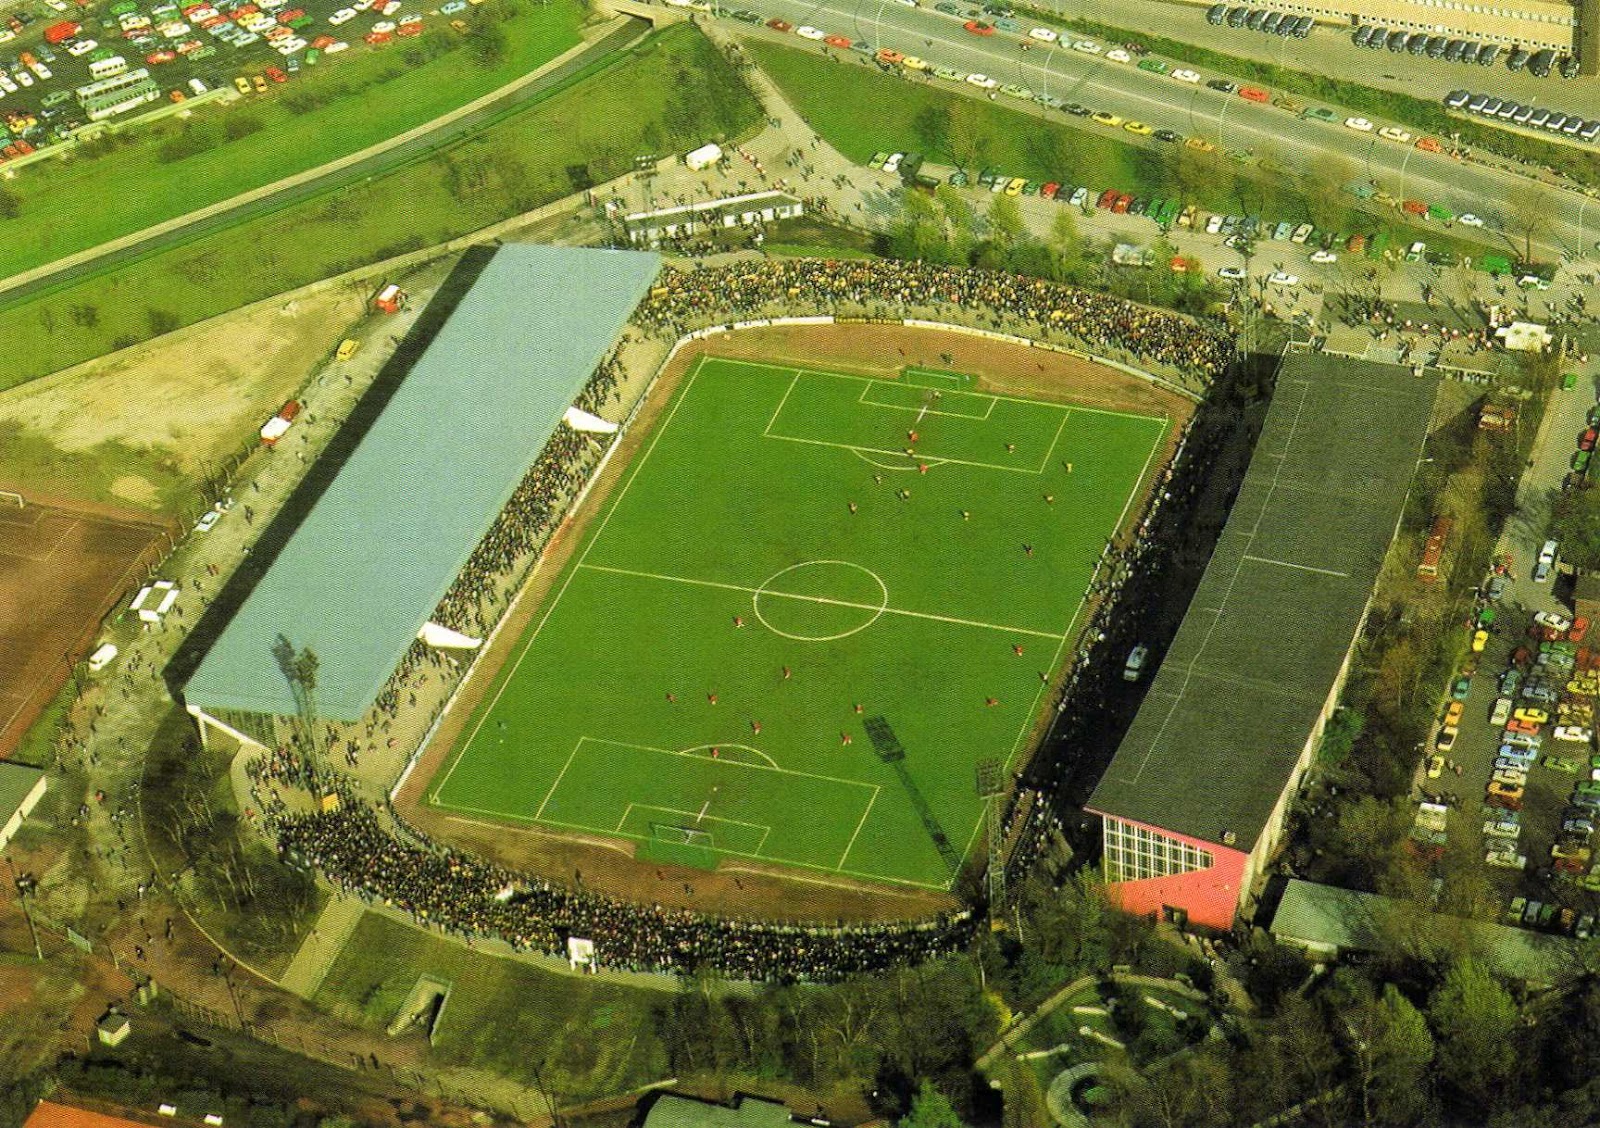 Rot Weiss Essen стадион. Программа стадион